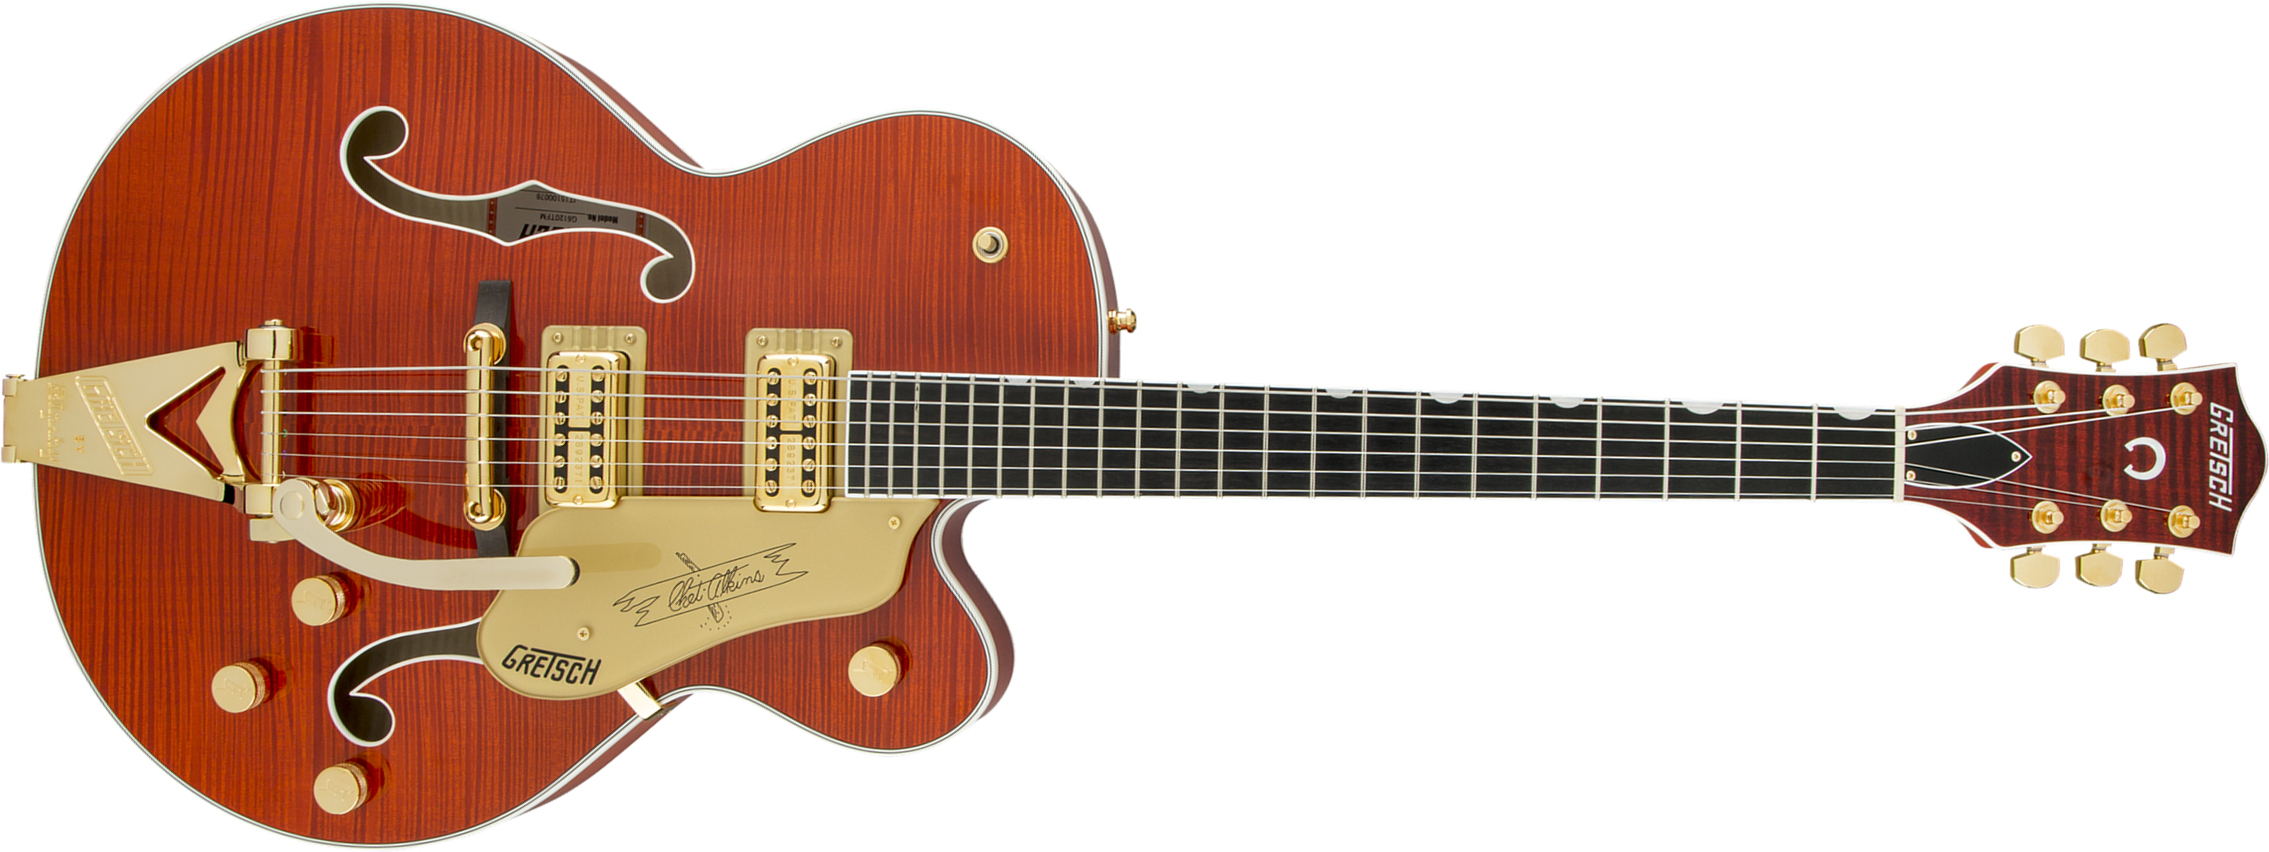 Gretsch G6120tfm Players Edition Nashville Pro Jap Bigsby Eb - Orange Stain - Semi hollow elektriche gitaar - Main picture